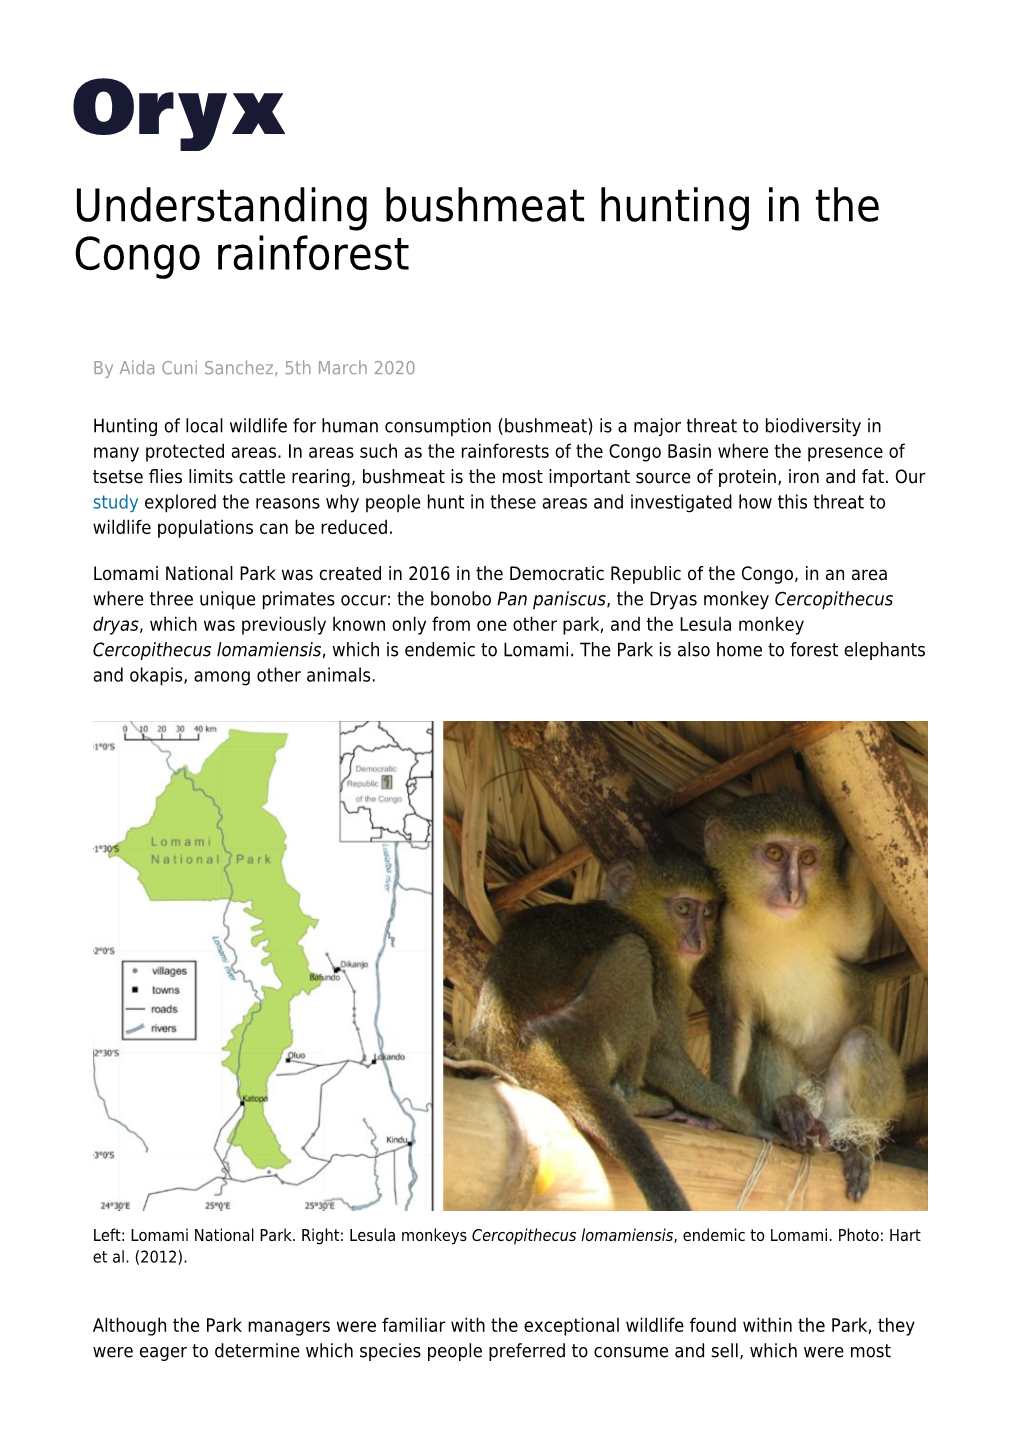 Understanding Bushmeat Hunting in the Congo Rainforest